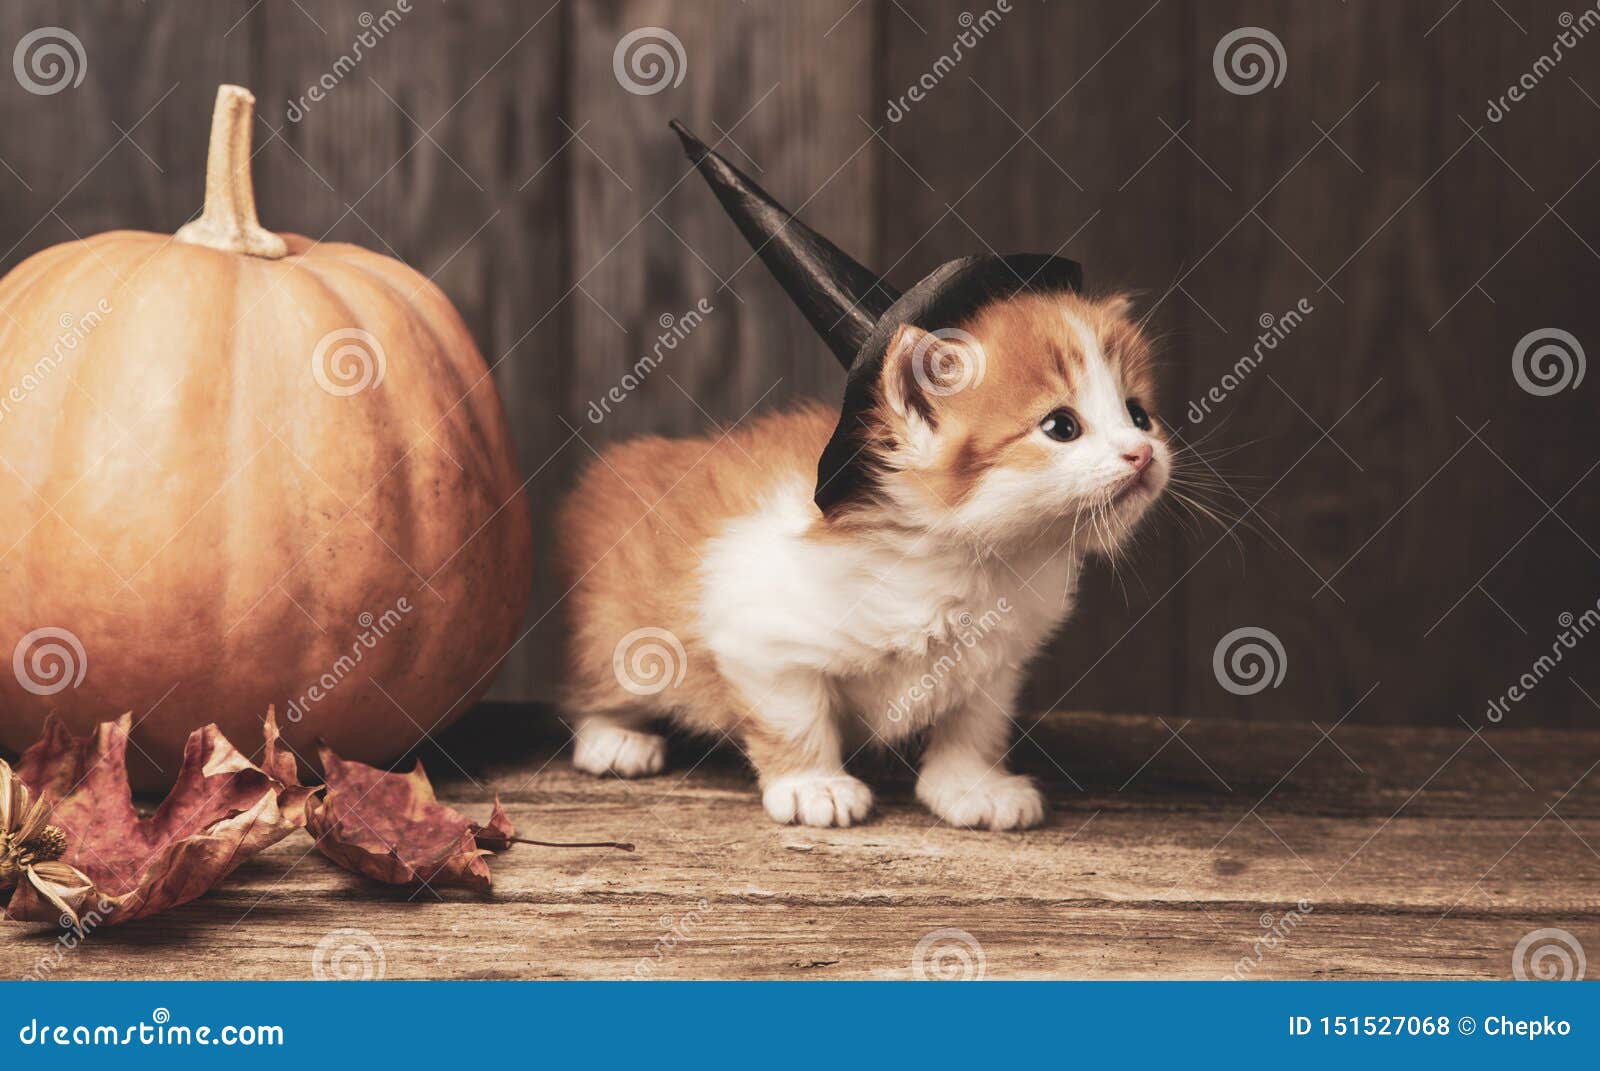 Ginger Kitten and Halloween Pumpkin Jack-o-lantern on Black Wood Background  Stock Photo - Image of animal, orange: 151527068